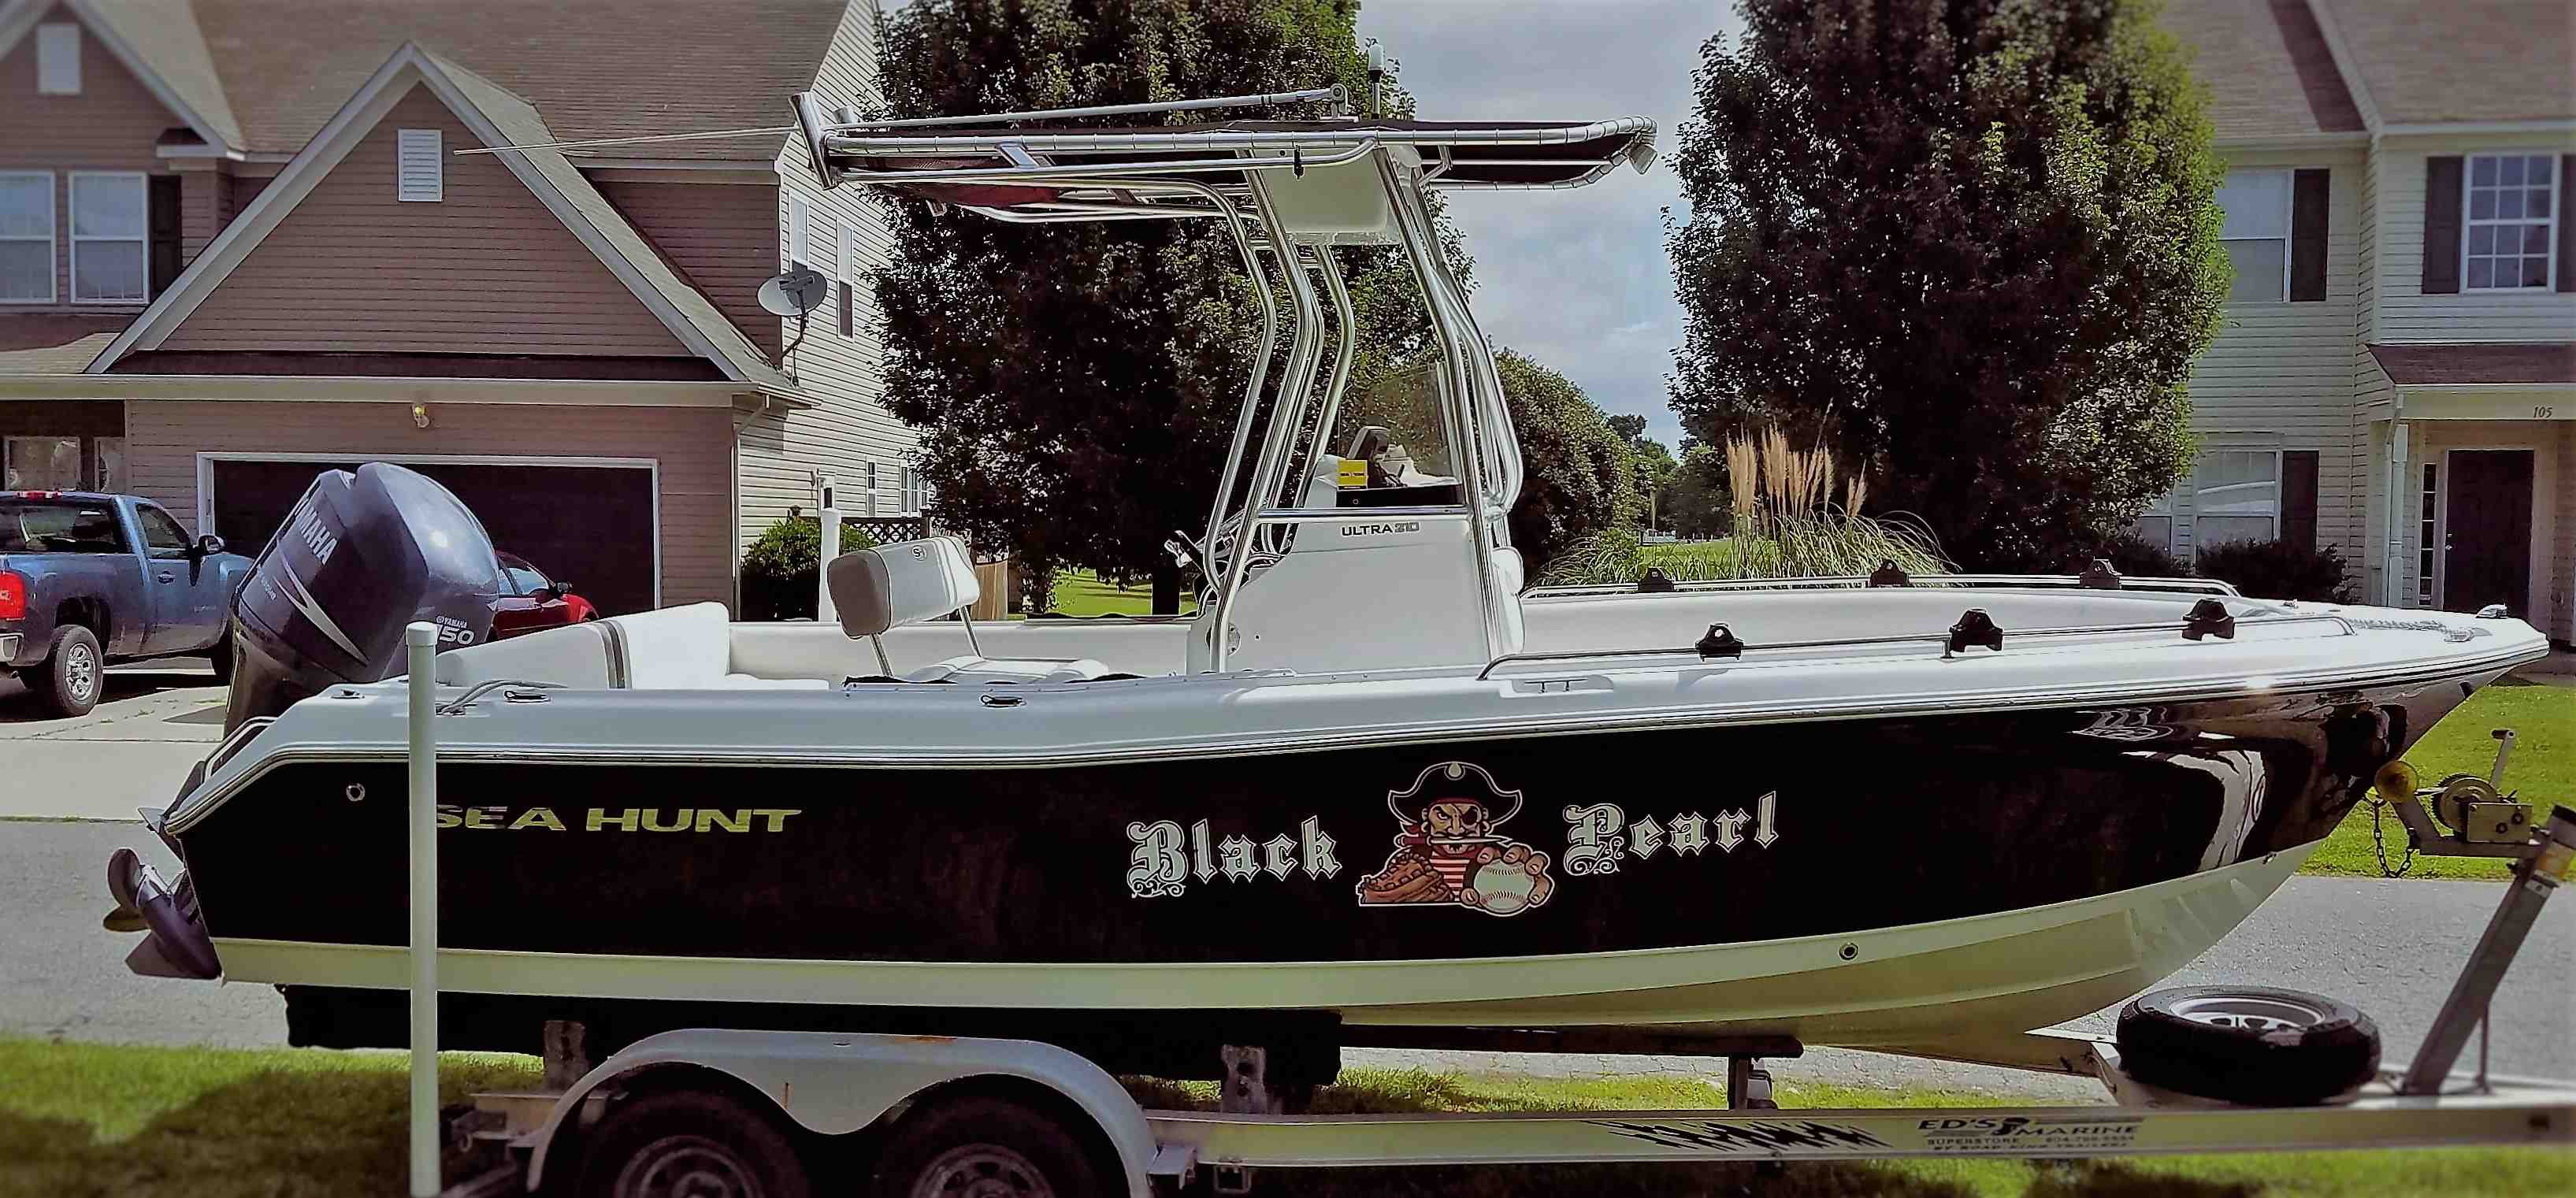  boat rentals Virginia VIRGINIA BEACH Virginia  Crestliner 1650 SC Fish Hawk 2014 16 Feet 